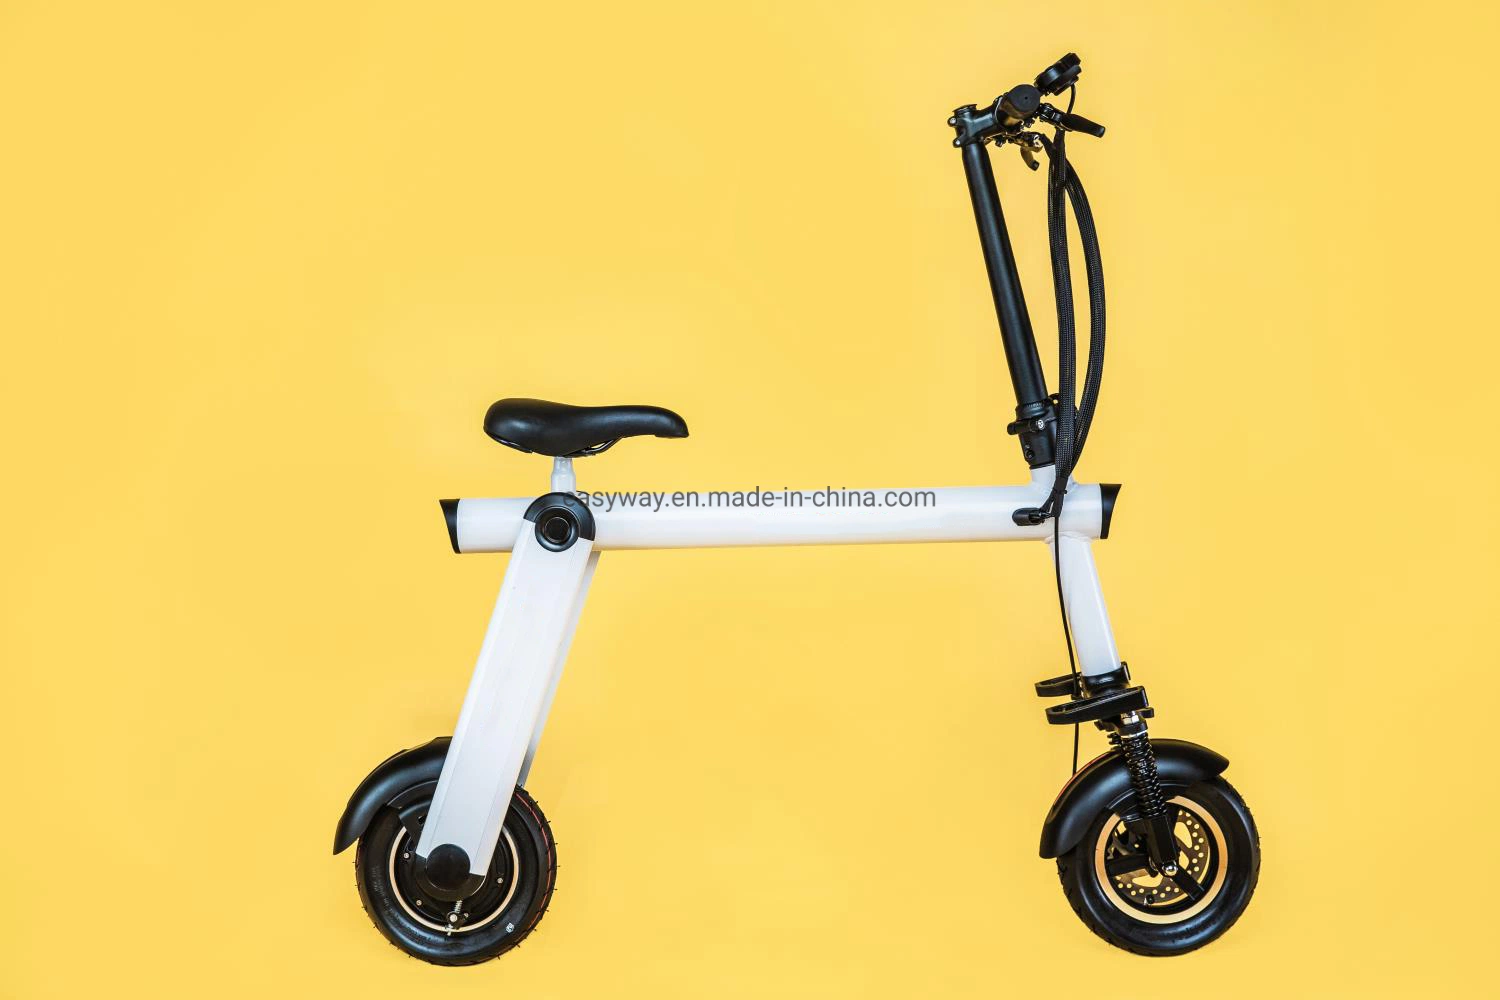 Mini bicicleta eléctrica con motor de 500 W